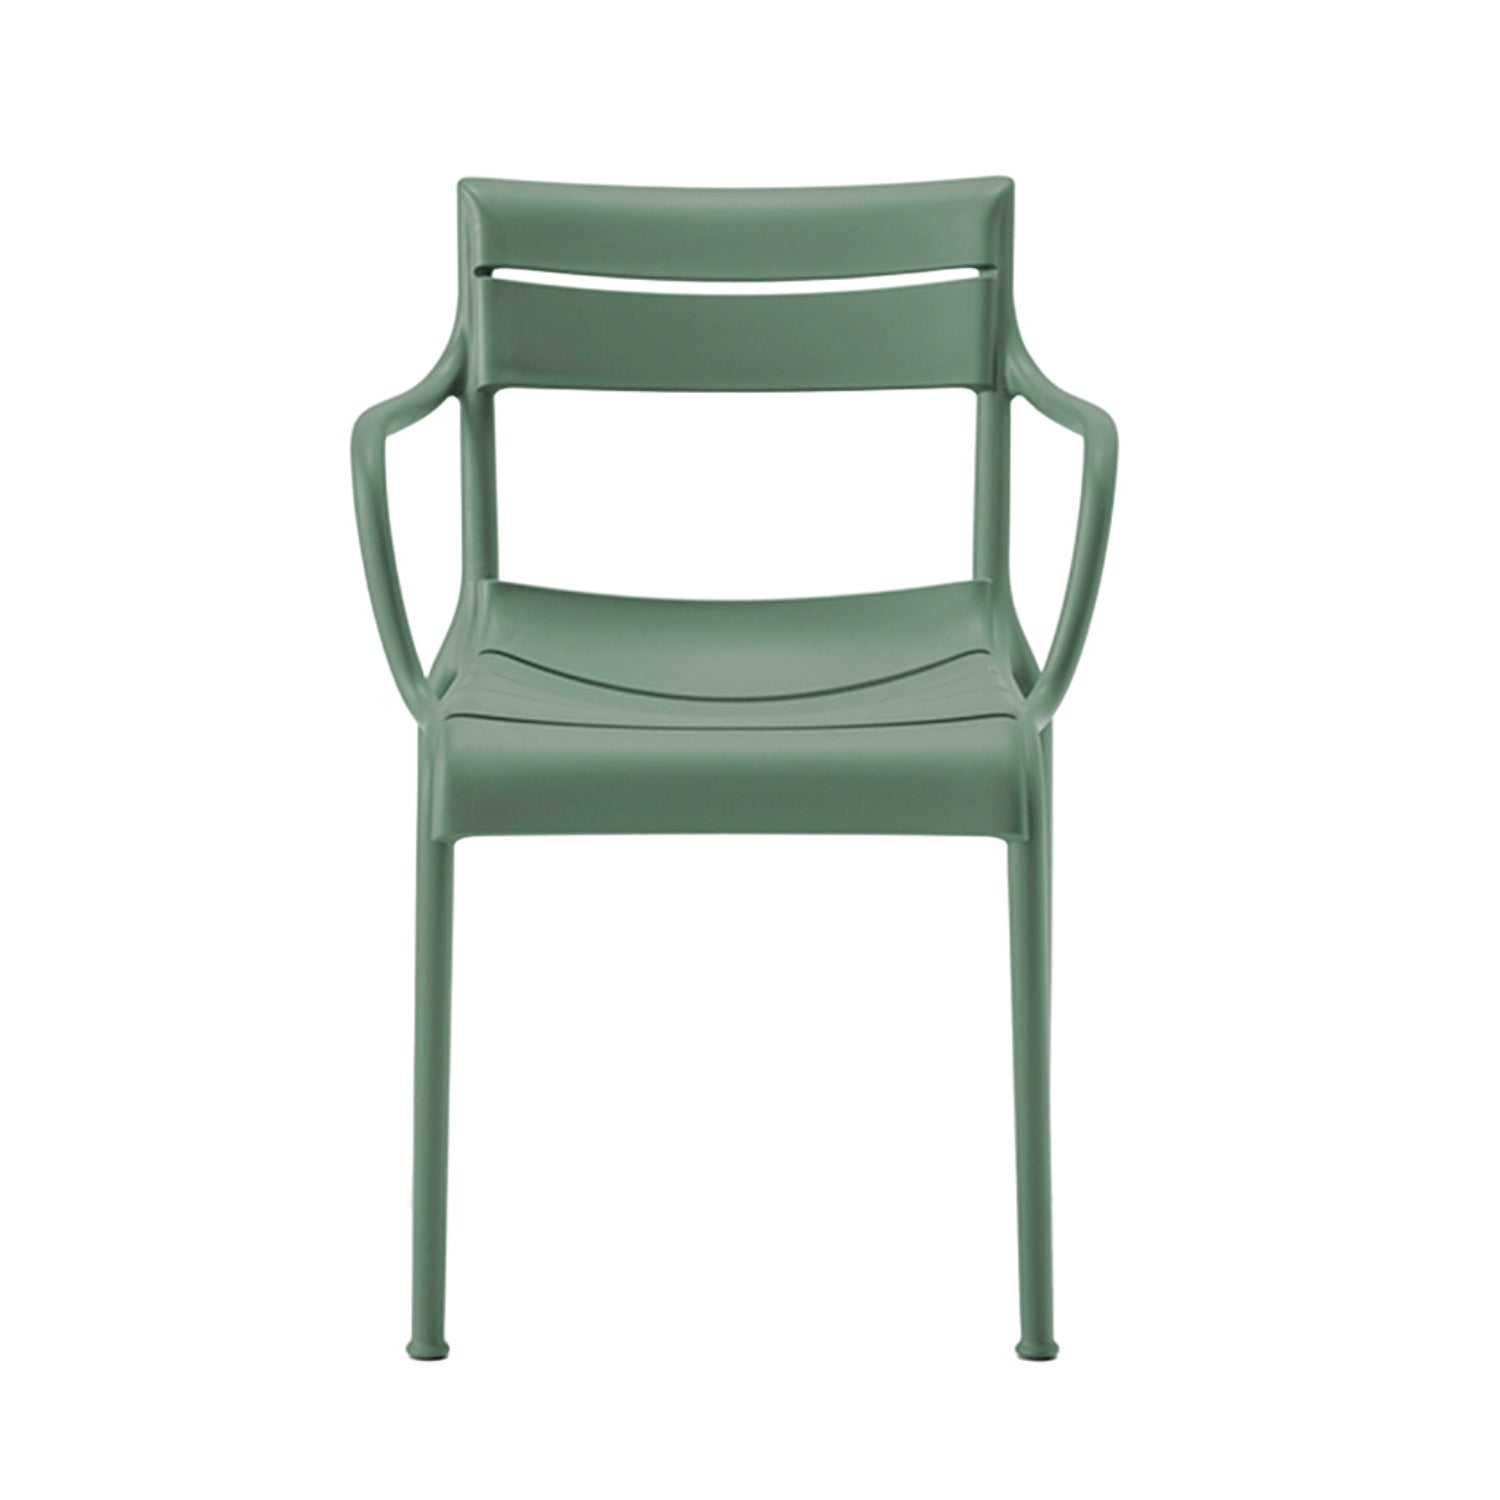 Pedrali Souvenir 555 Outdoor Dining Armchair in green